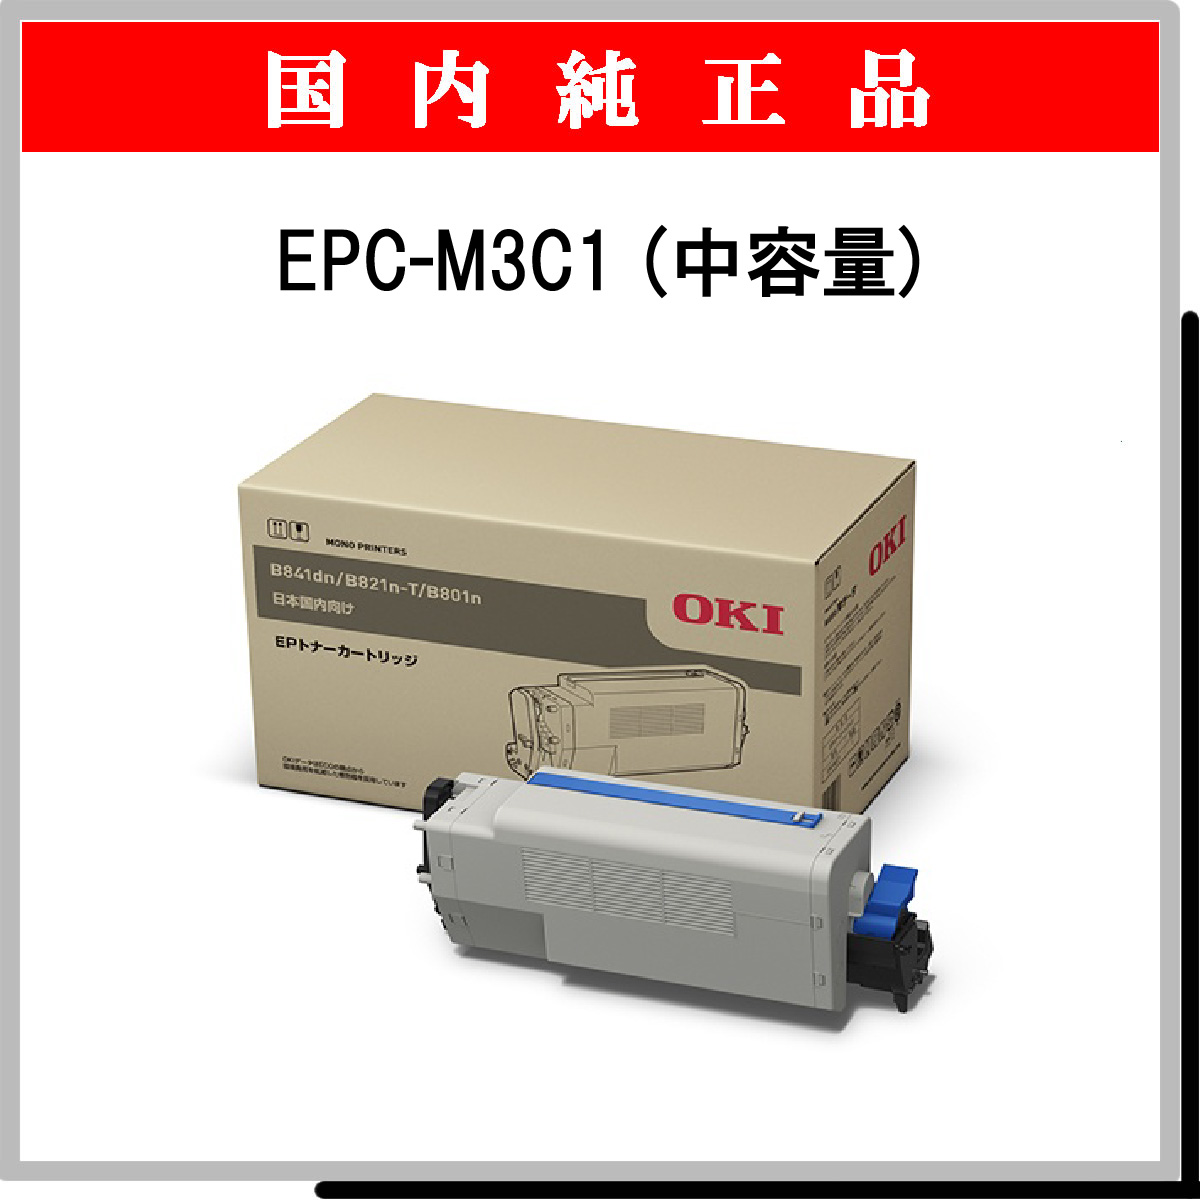 EPC-M3C1 (中容量) 純正